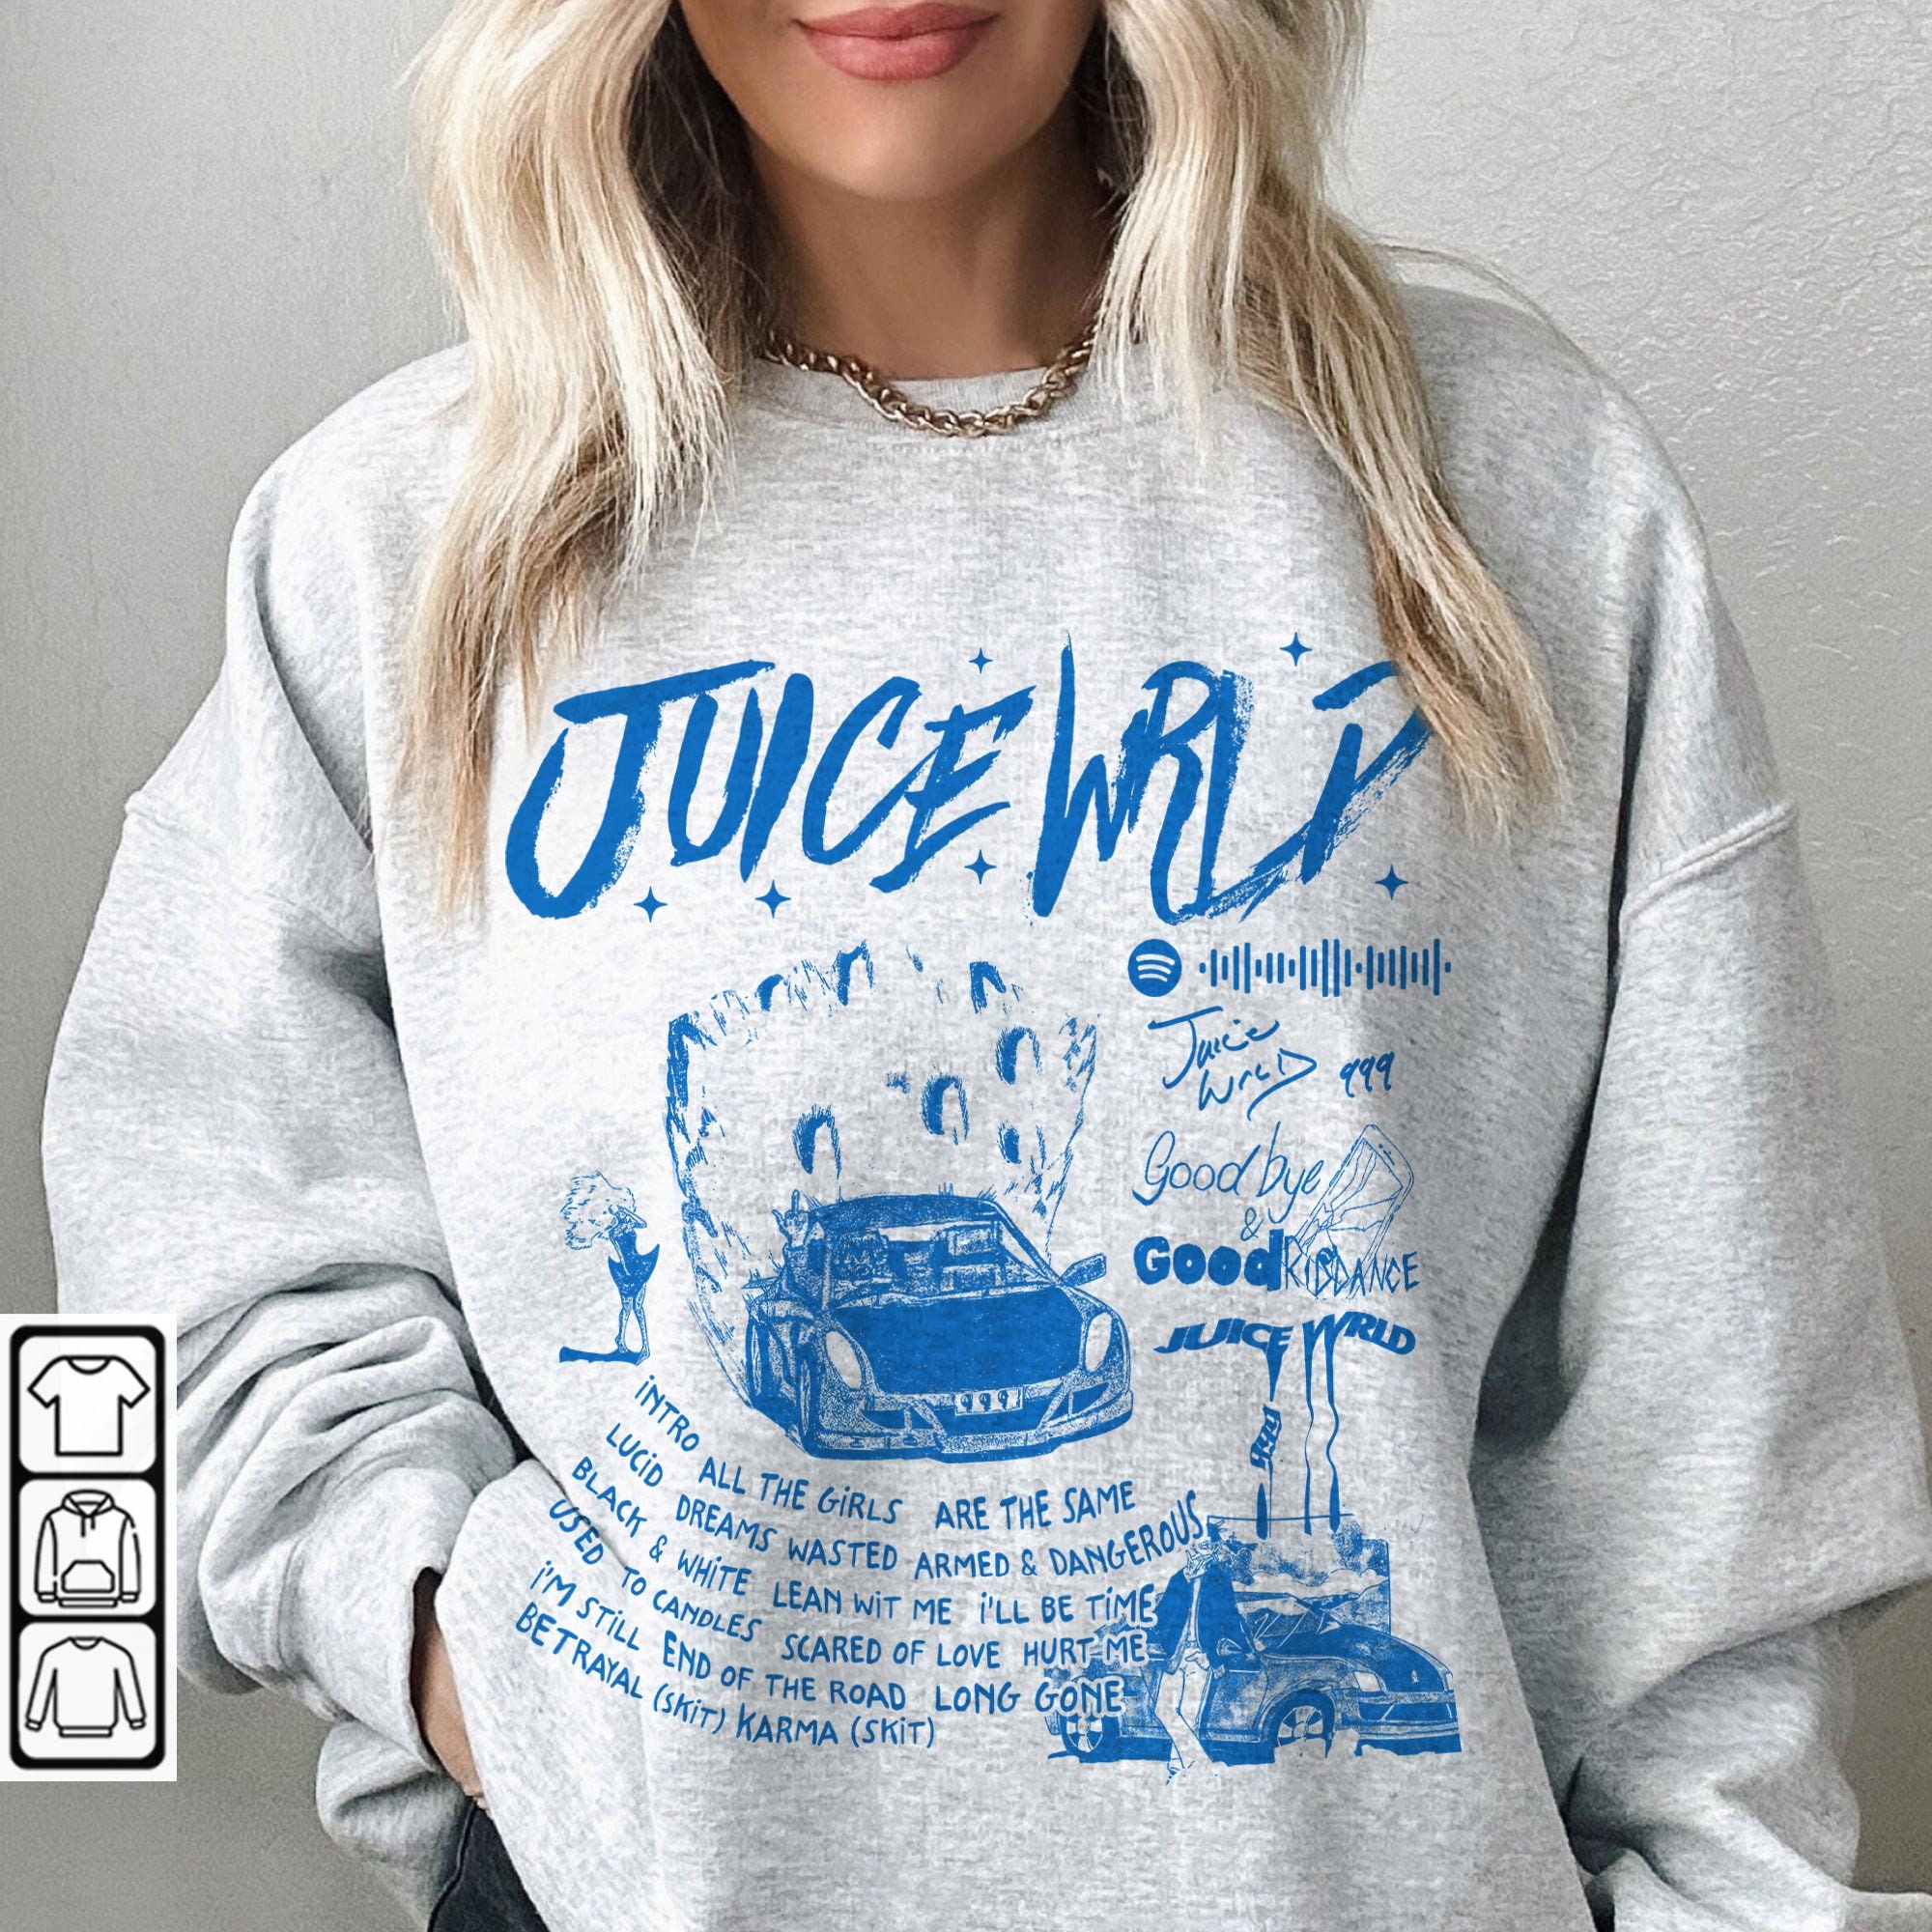 Juice Wrld 999 Legends Never Die Merch Hoodie Sweatshirt Long Sleeve  Women/Men Winter New Logo R.I.P Hooded 